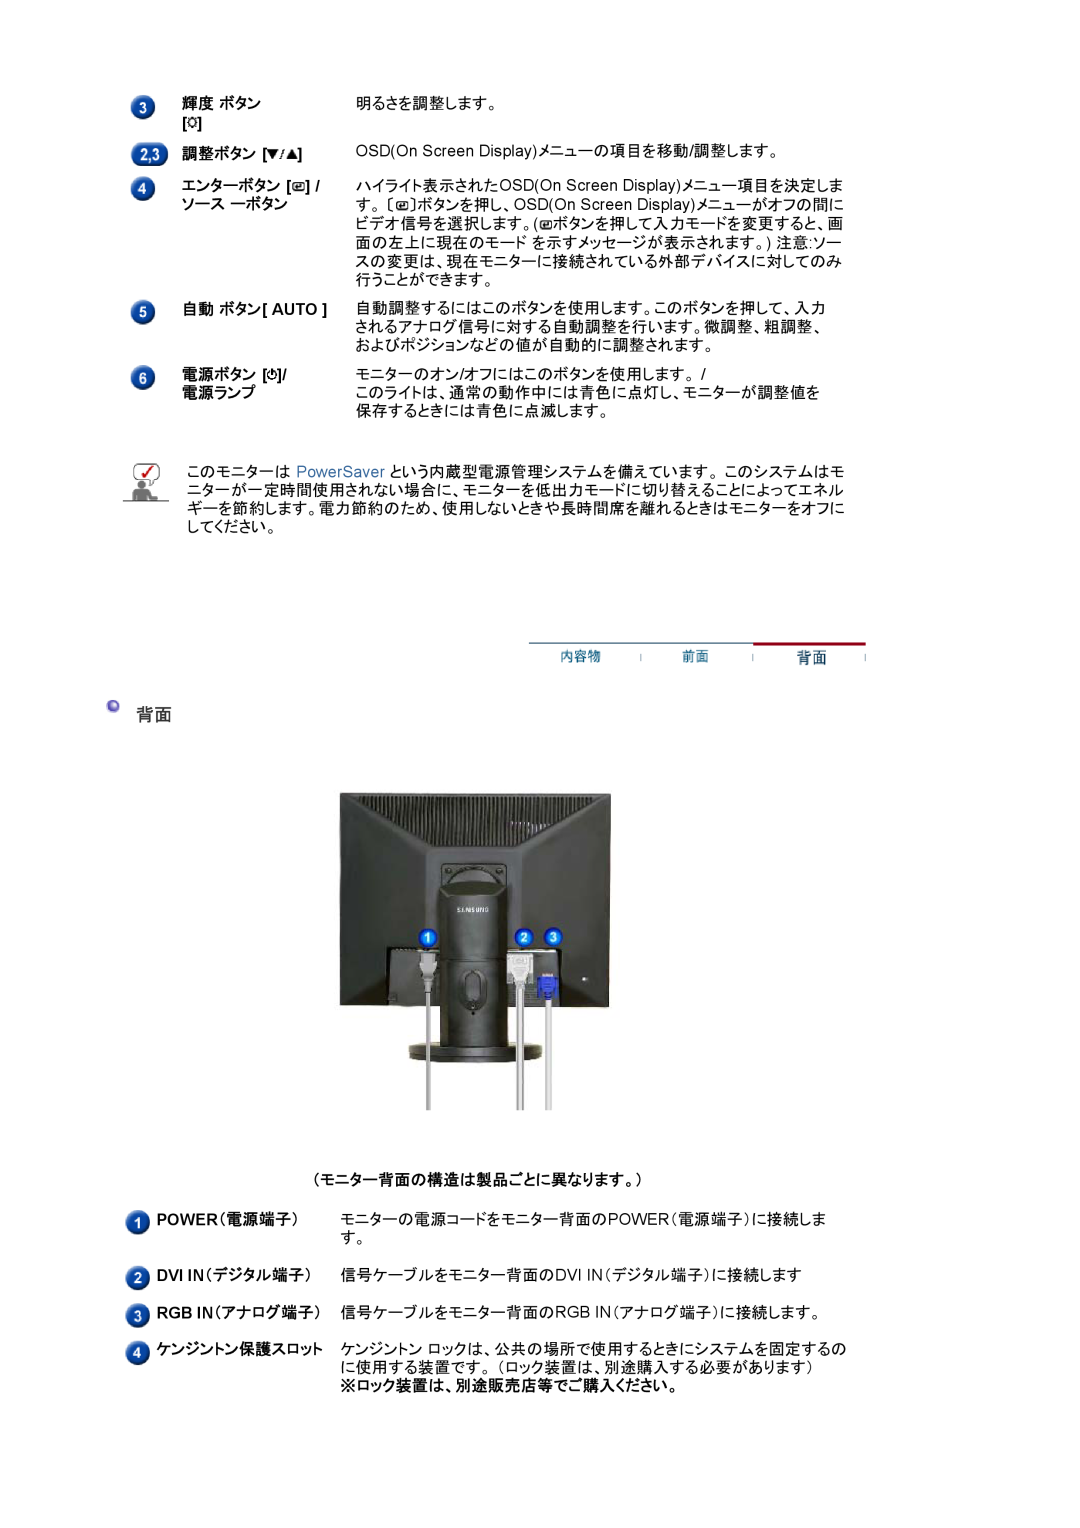 Samsung LS19HAXKNH/XSJ manual 輝度 ボタン, 調整ボタン, 自動 ボタン Auto, 電源ボタン / 電源ランプ, （モニター背面の構造は製品ごとに異なります。）, ※ロック装置は、別途販売店等でご購入ください。 